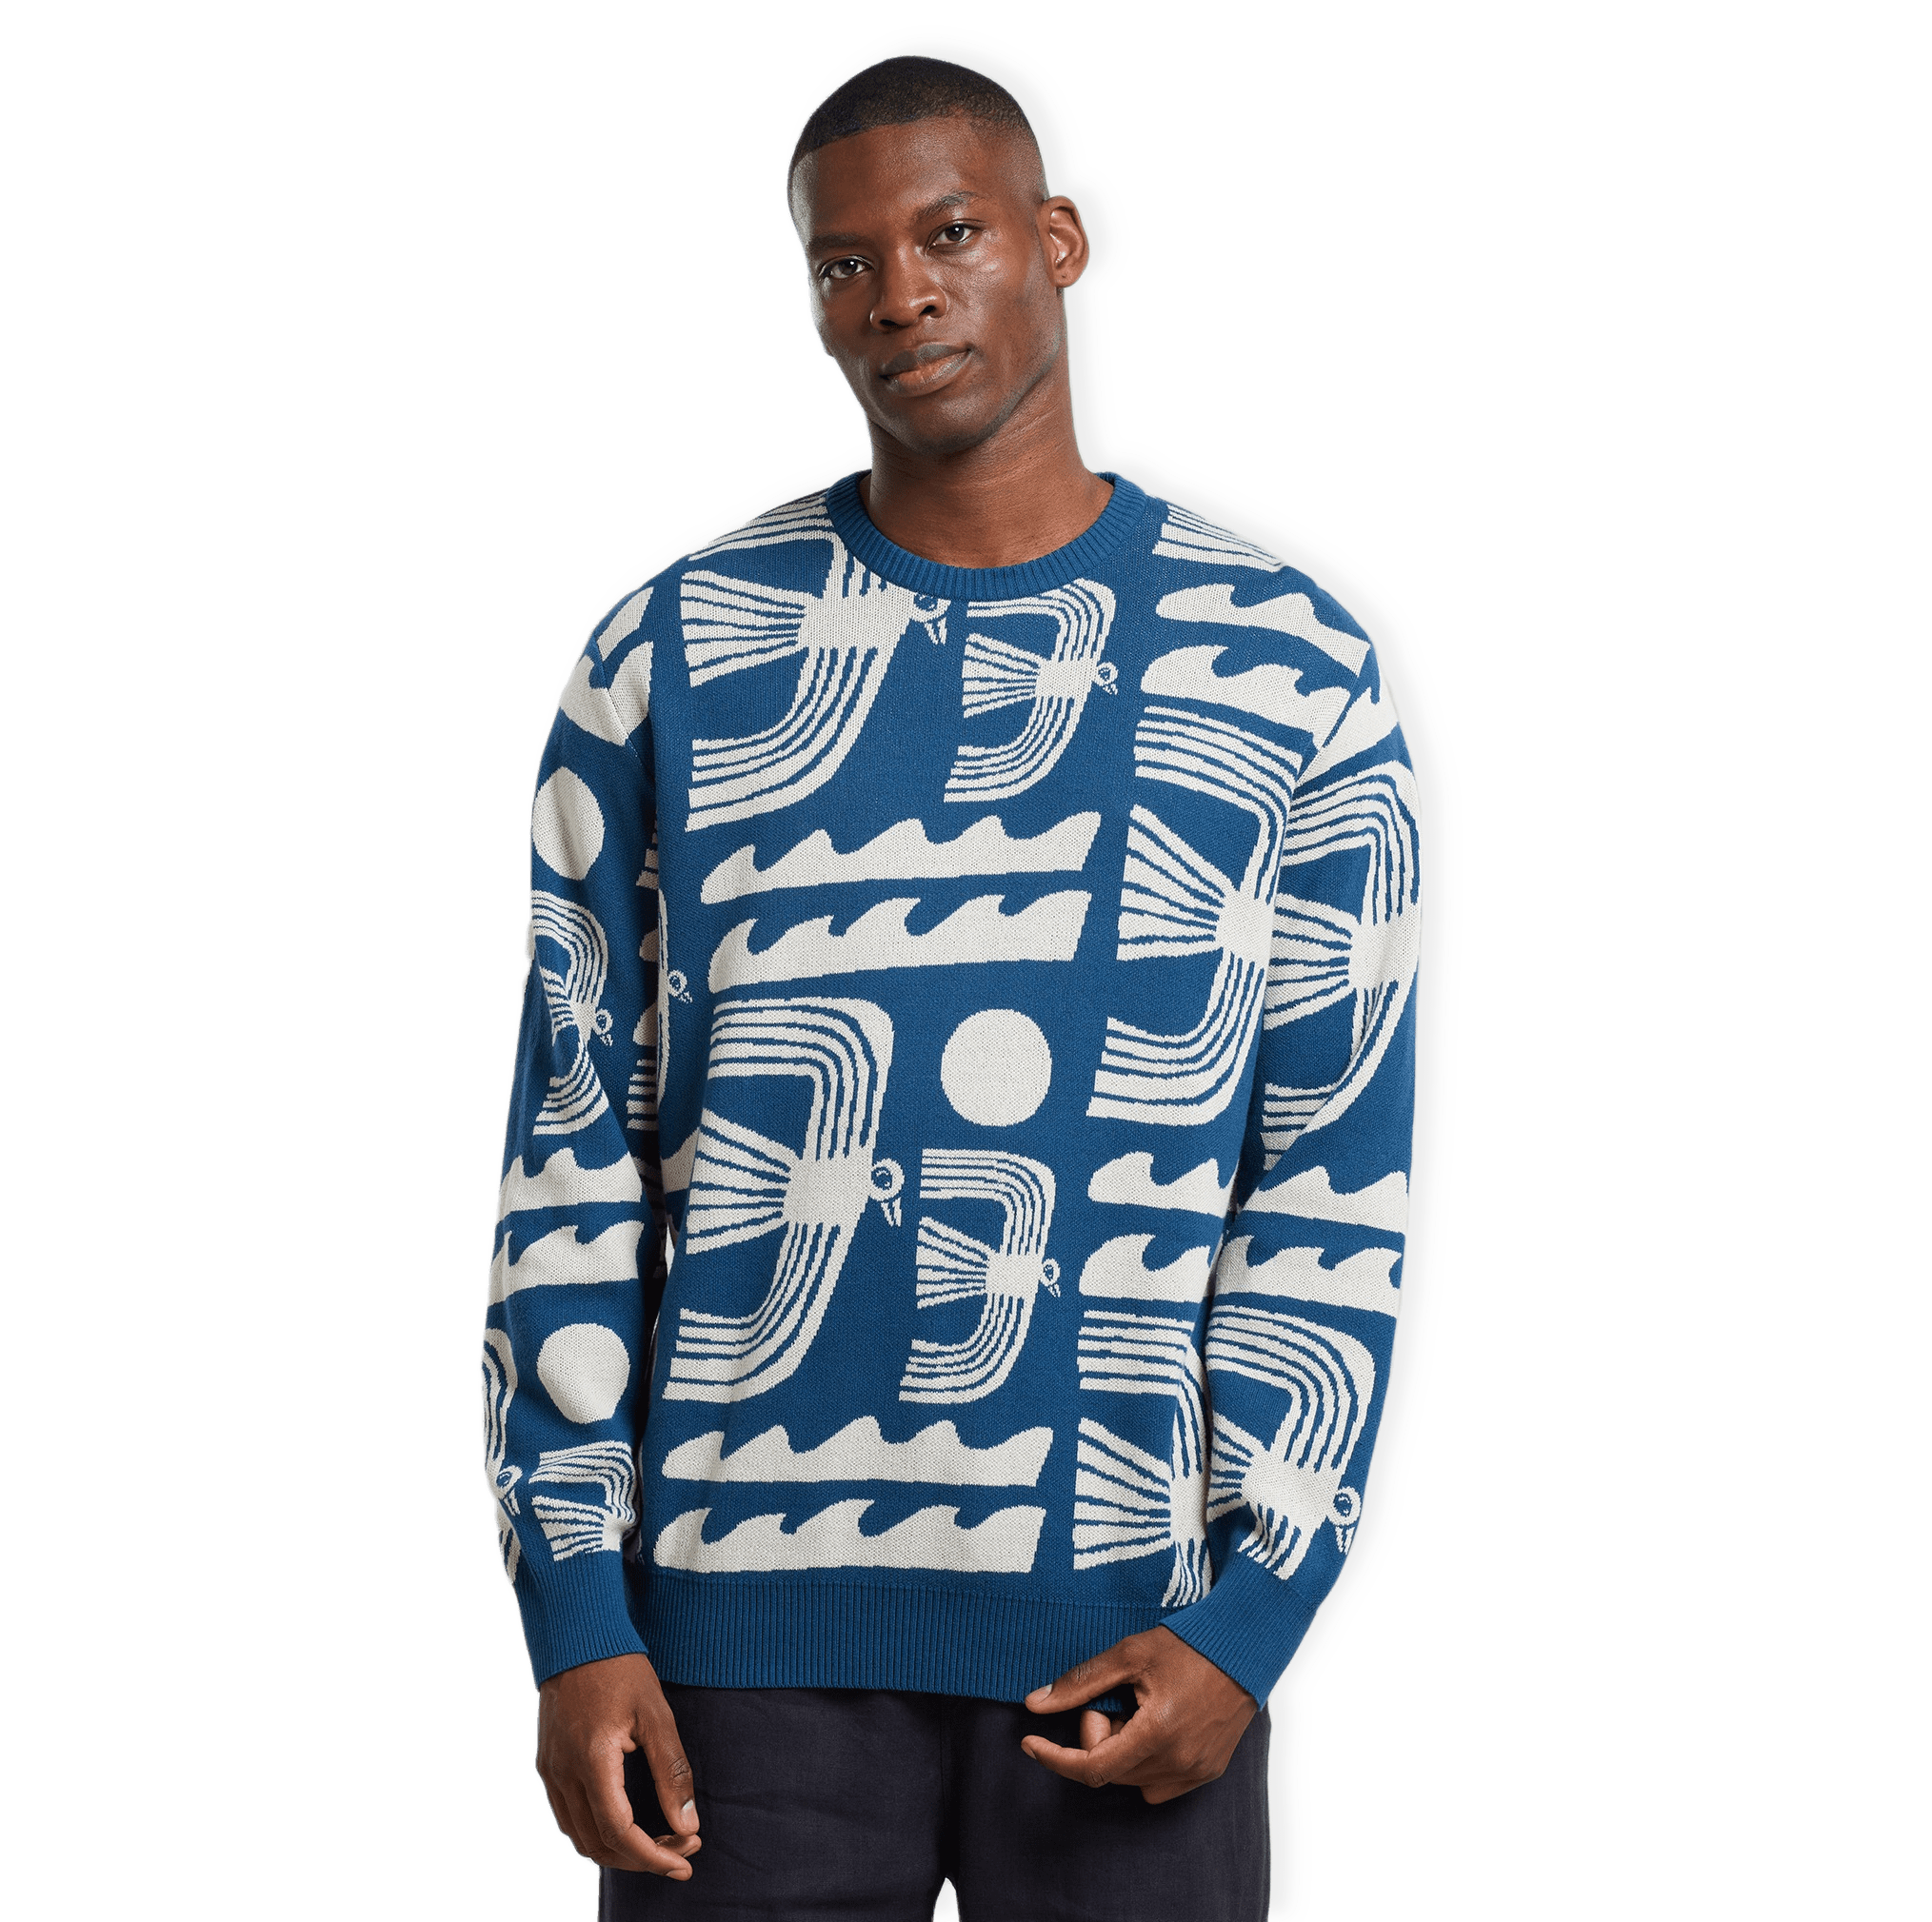 Sweater Mora Seagulls Majolica Blue från Dedicated